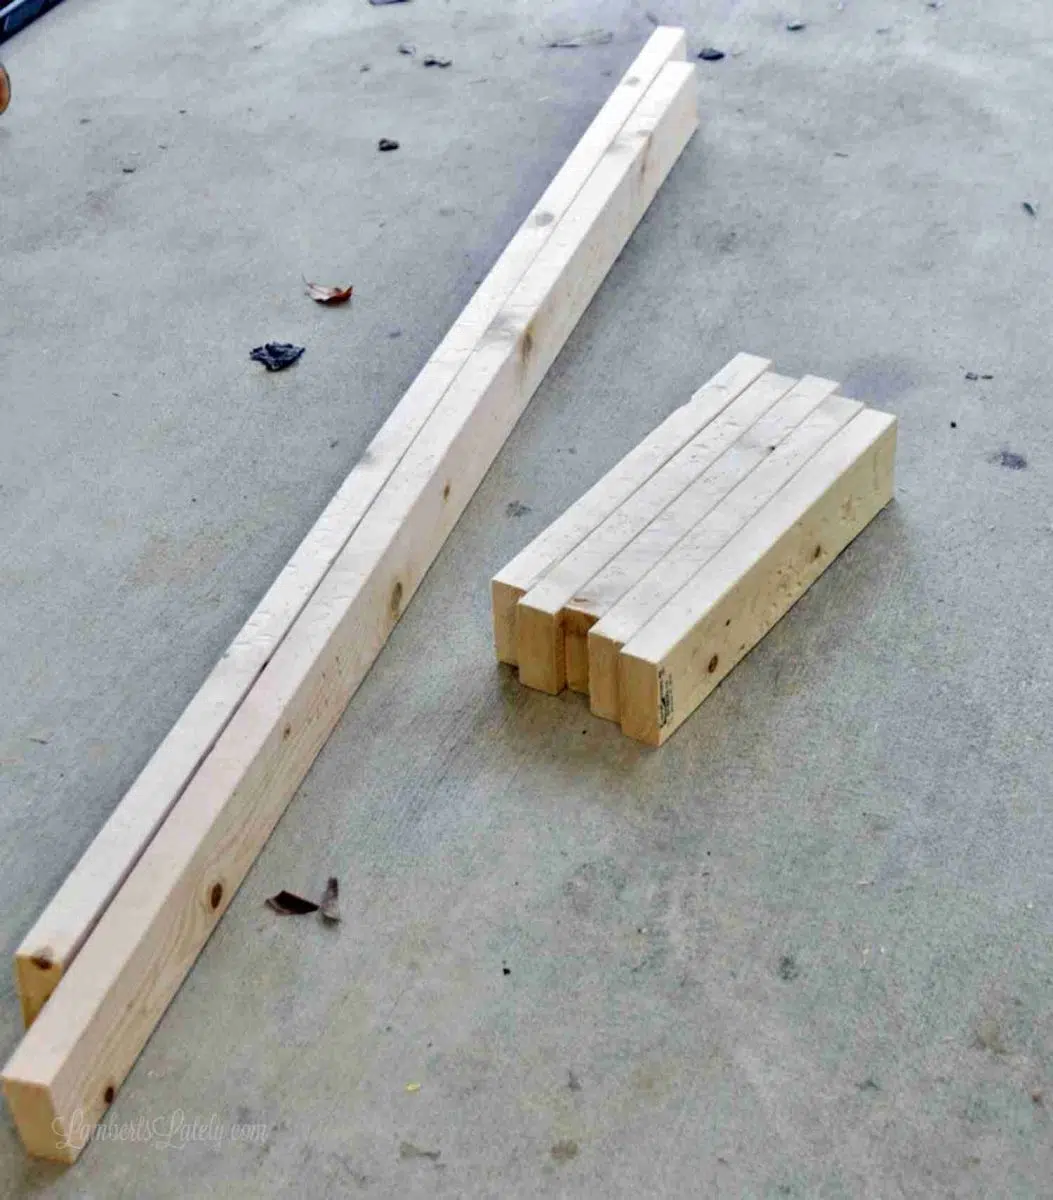 organized cut stacks of 2x4" wood on a garage floor.